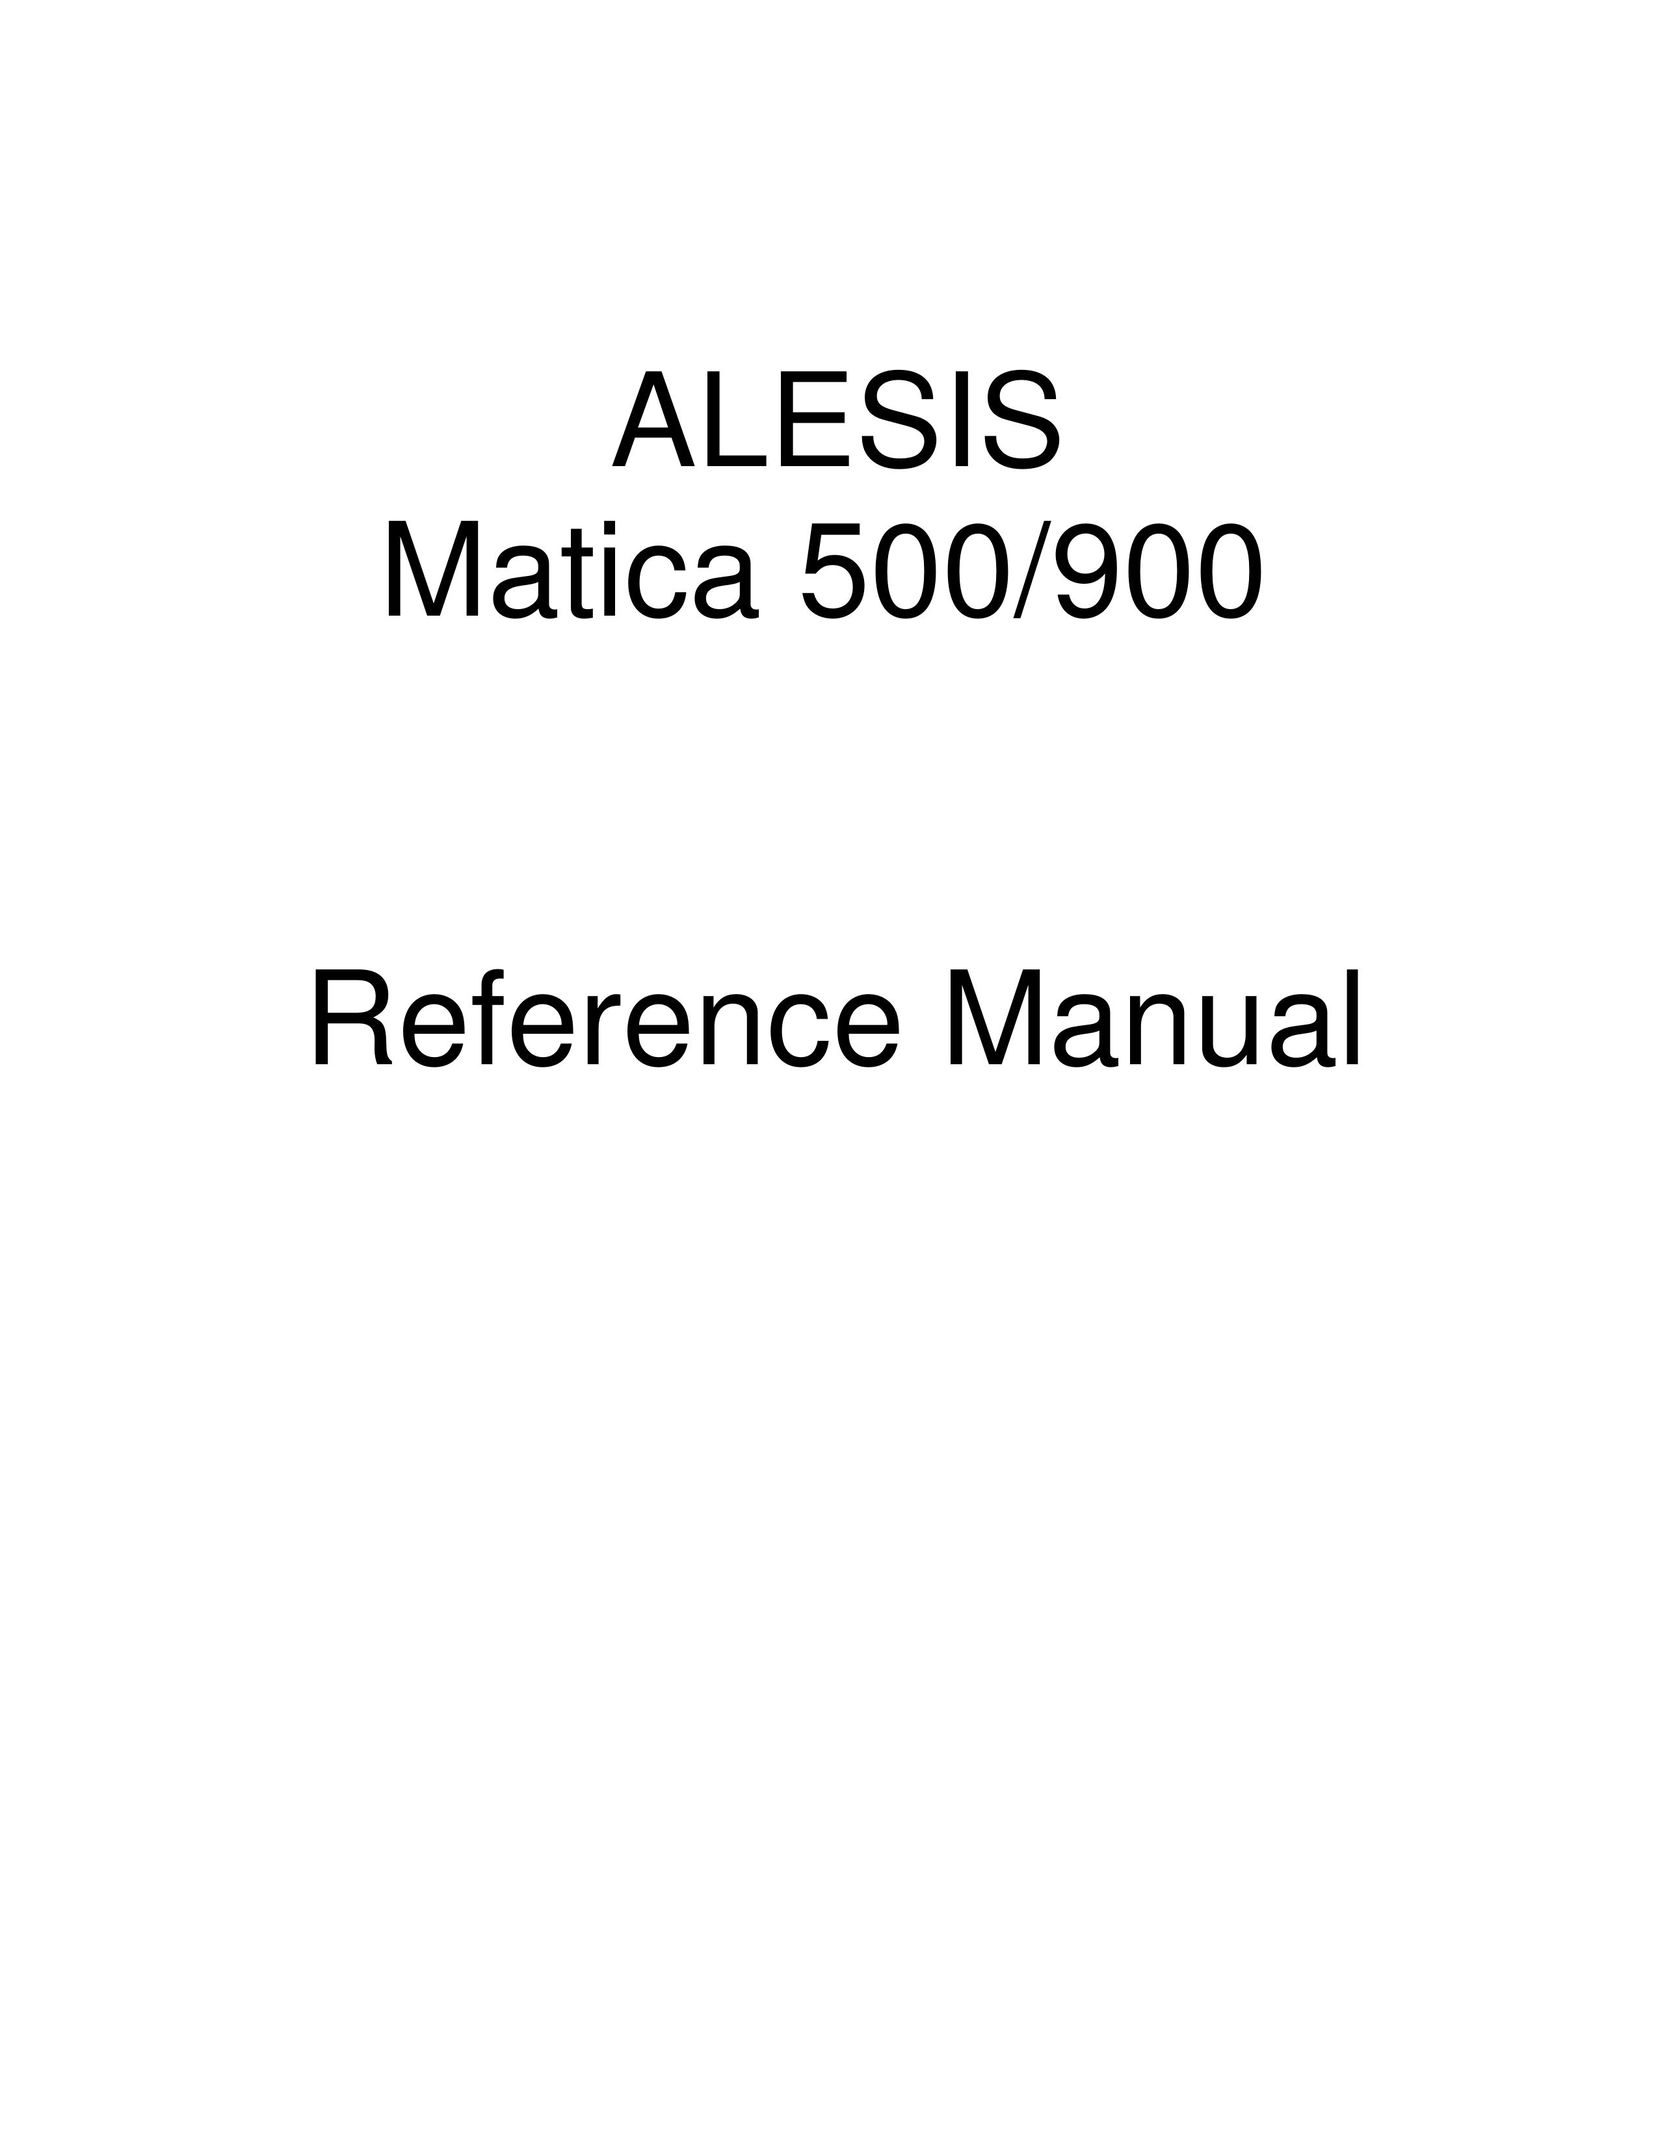 Alesis Matica 500 Stereo Amplifier User Manual